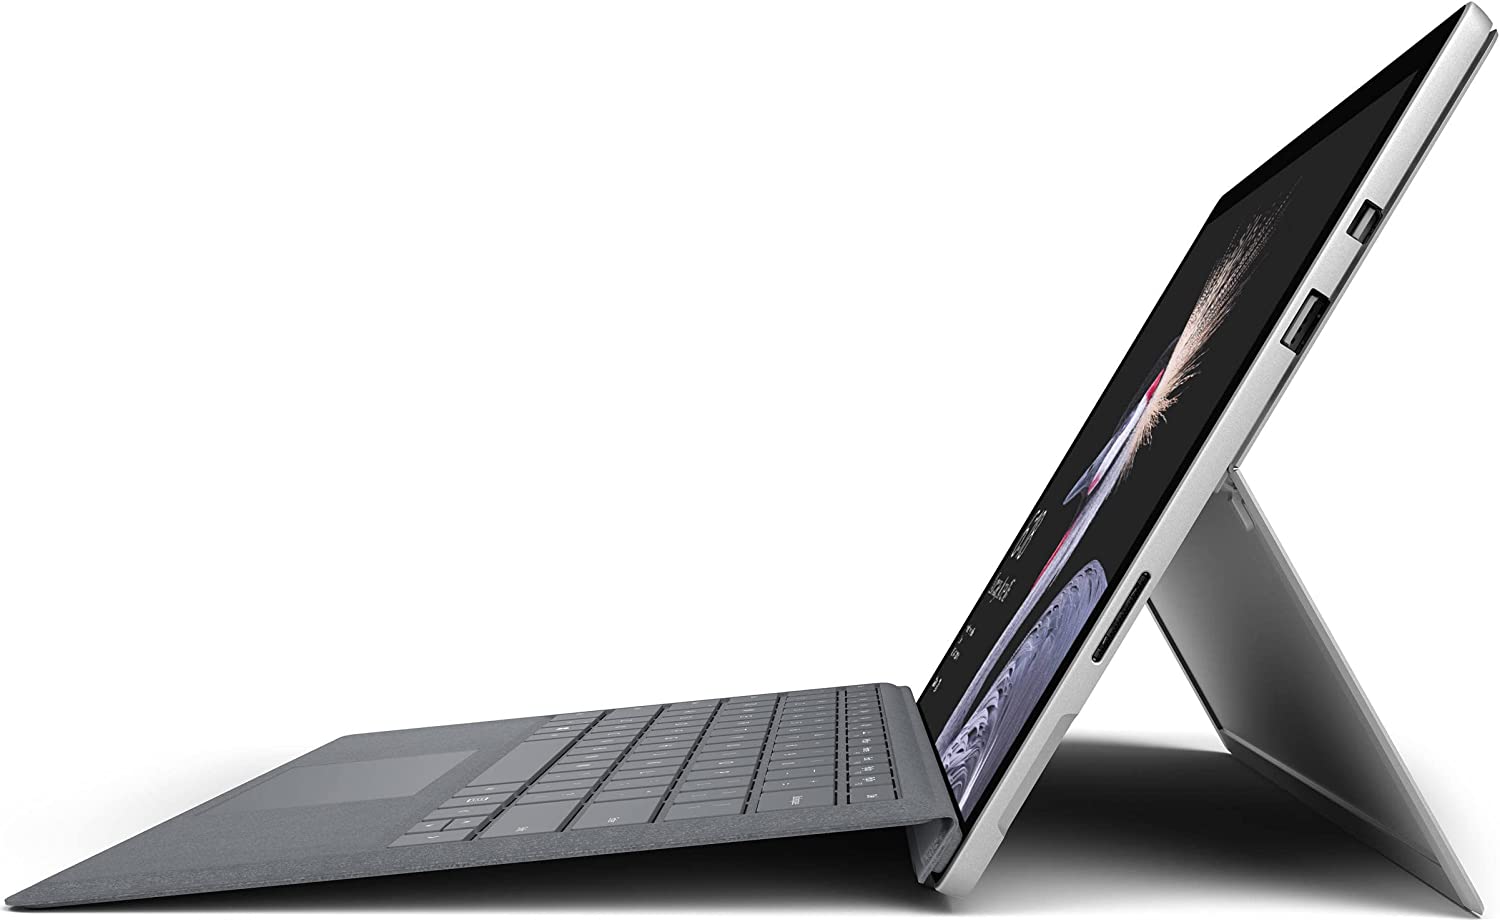 Microsoft Surface Pro 5 Tablet Core™ I5-7300U 2.6Ghz 8GB 256GB SSD 12.3" (2736 x 1824) TOUCHSCREEN - Renewed